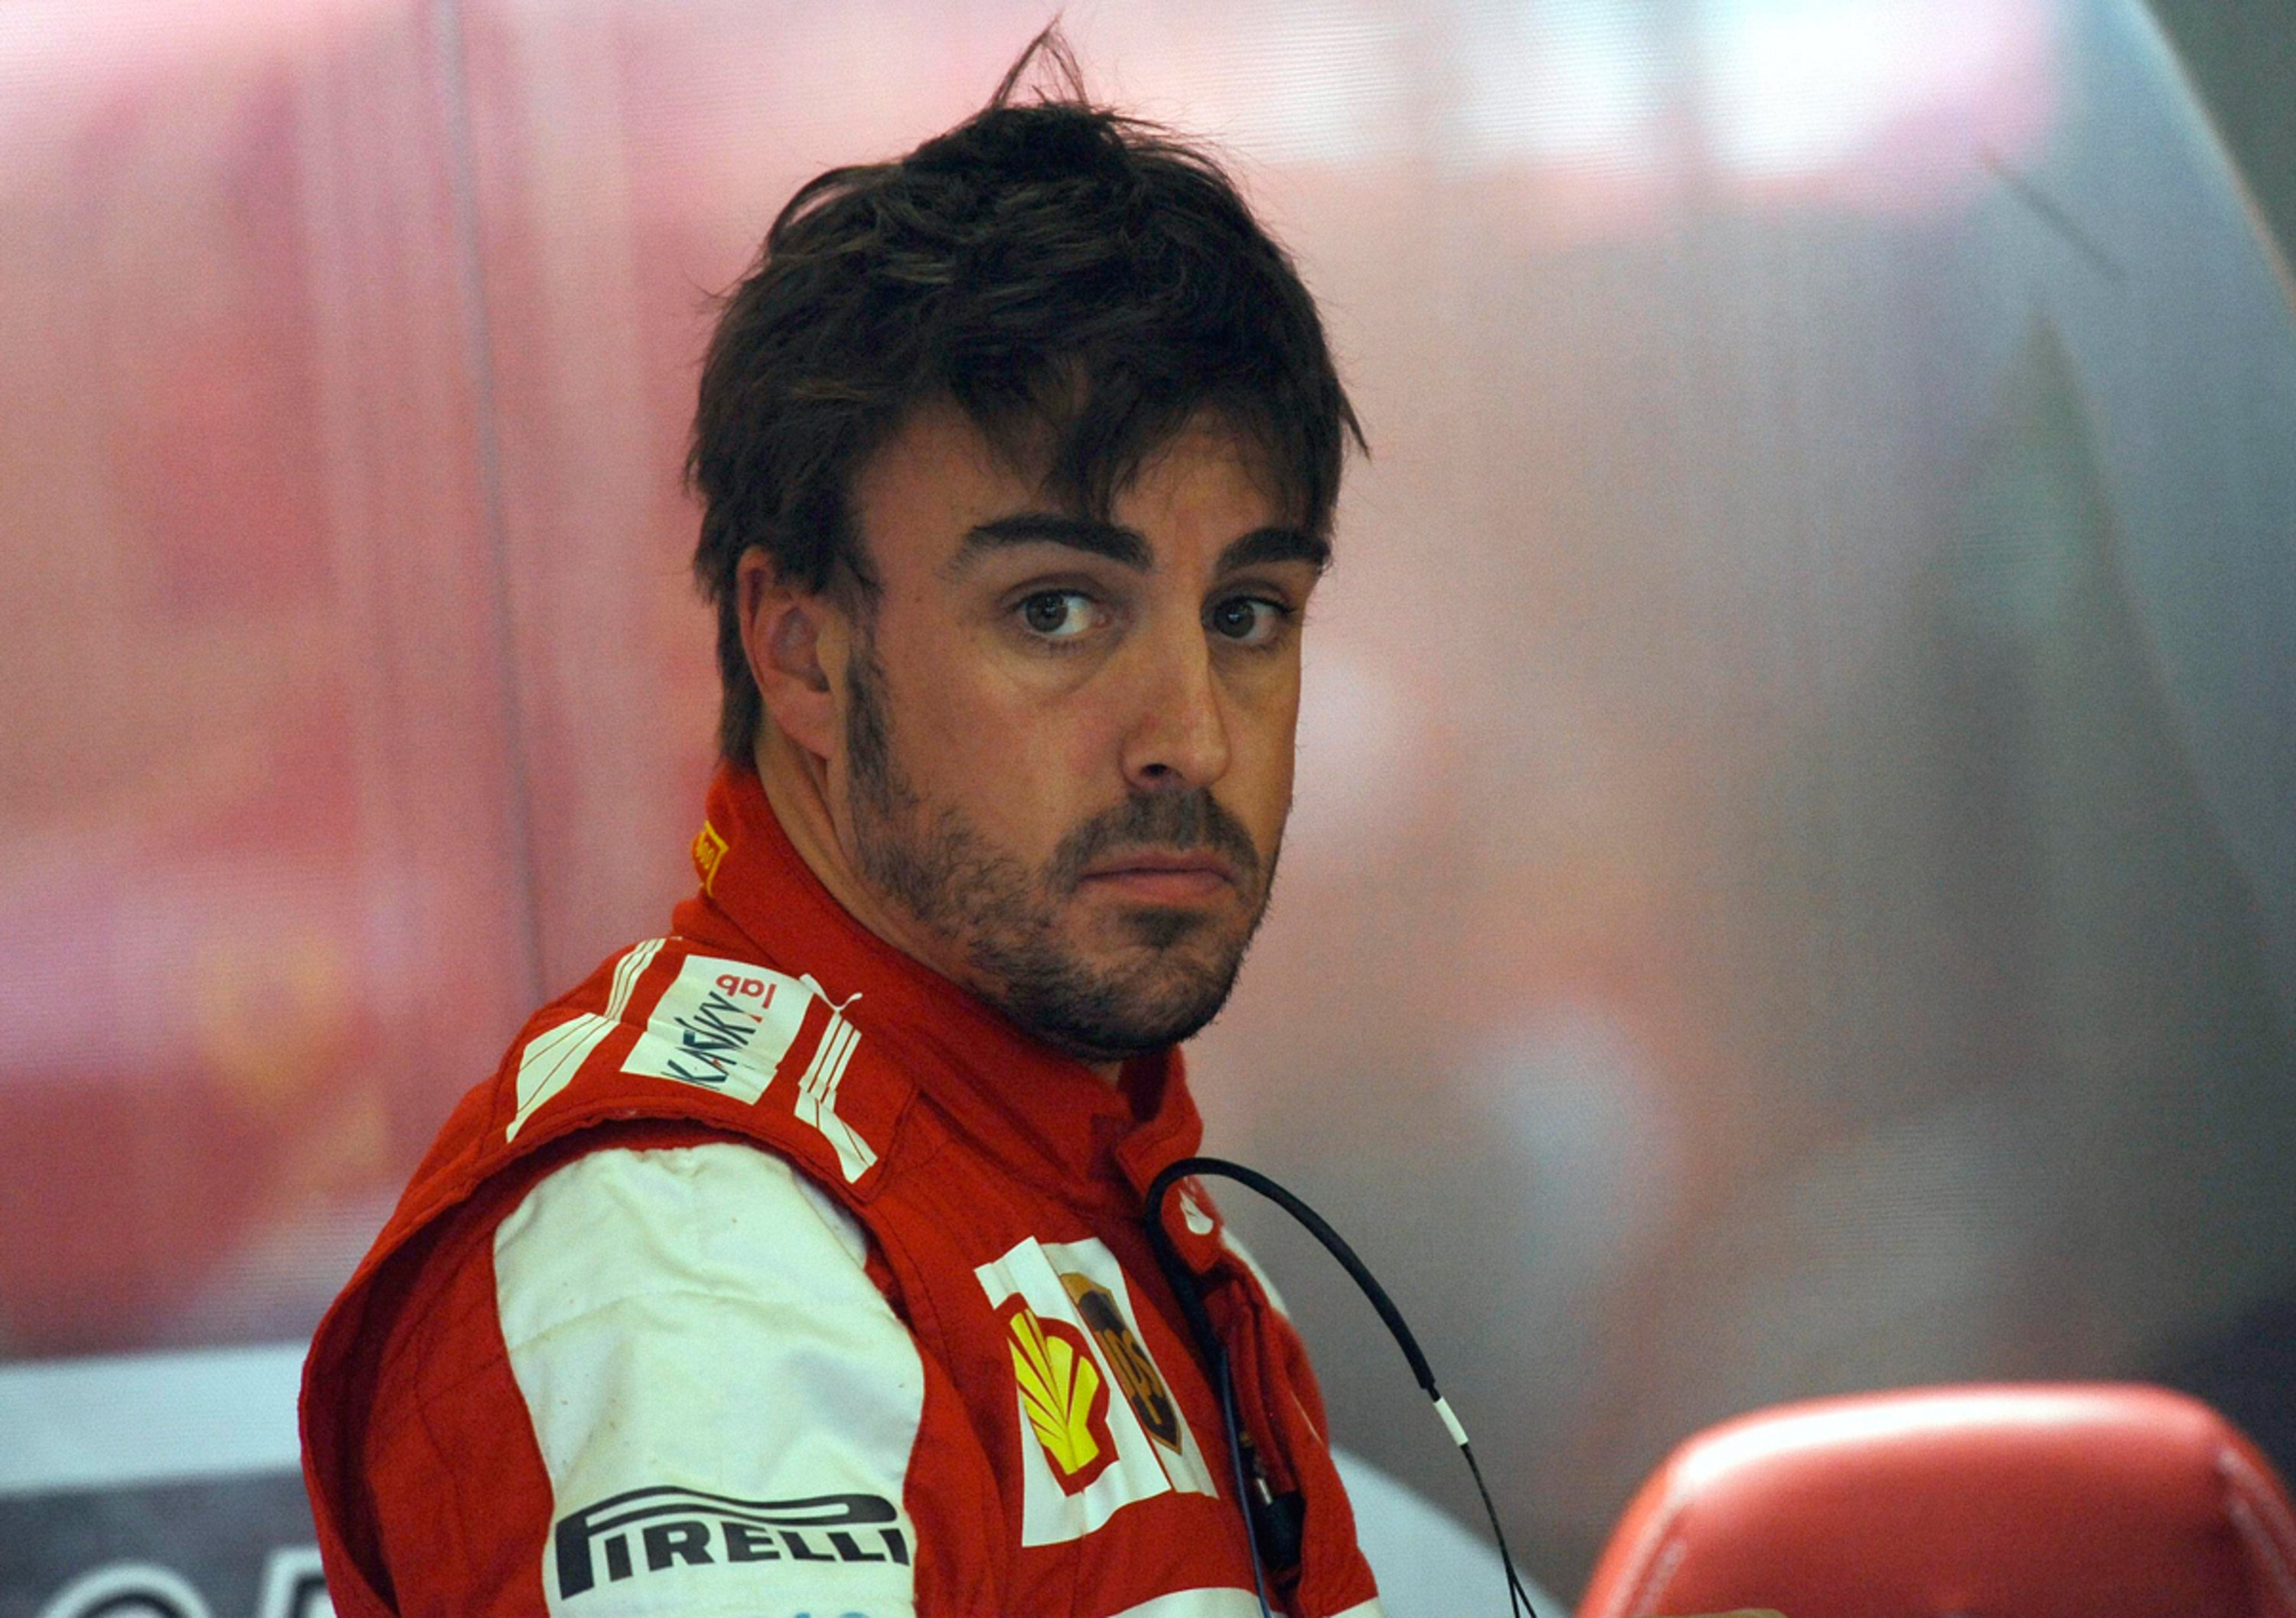 F1 GP Malesia 2013: Sepang amara per la Ferrari